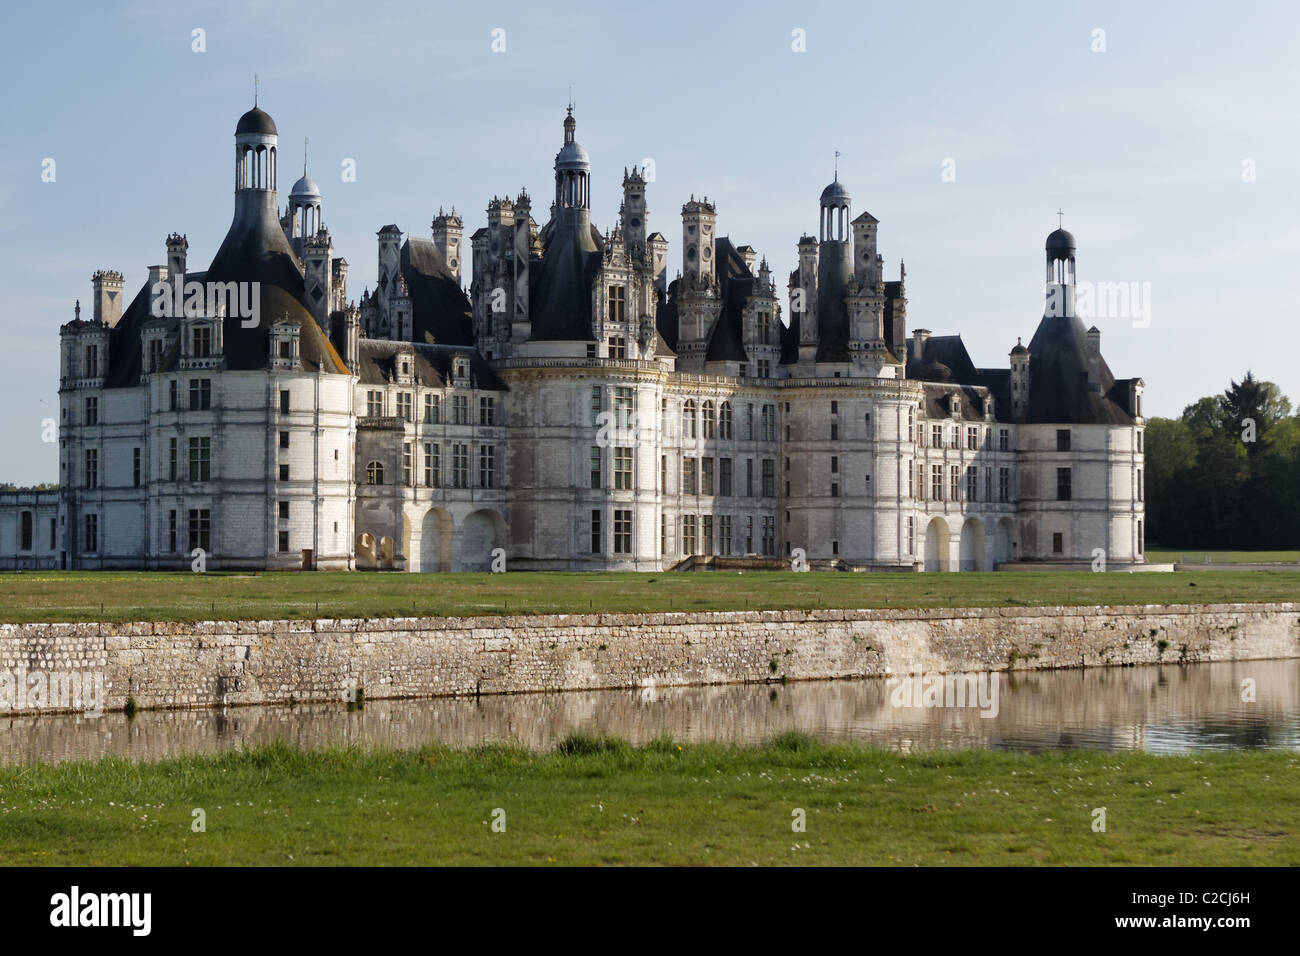 Royal Château de Chambord, France Stock Photo